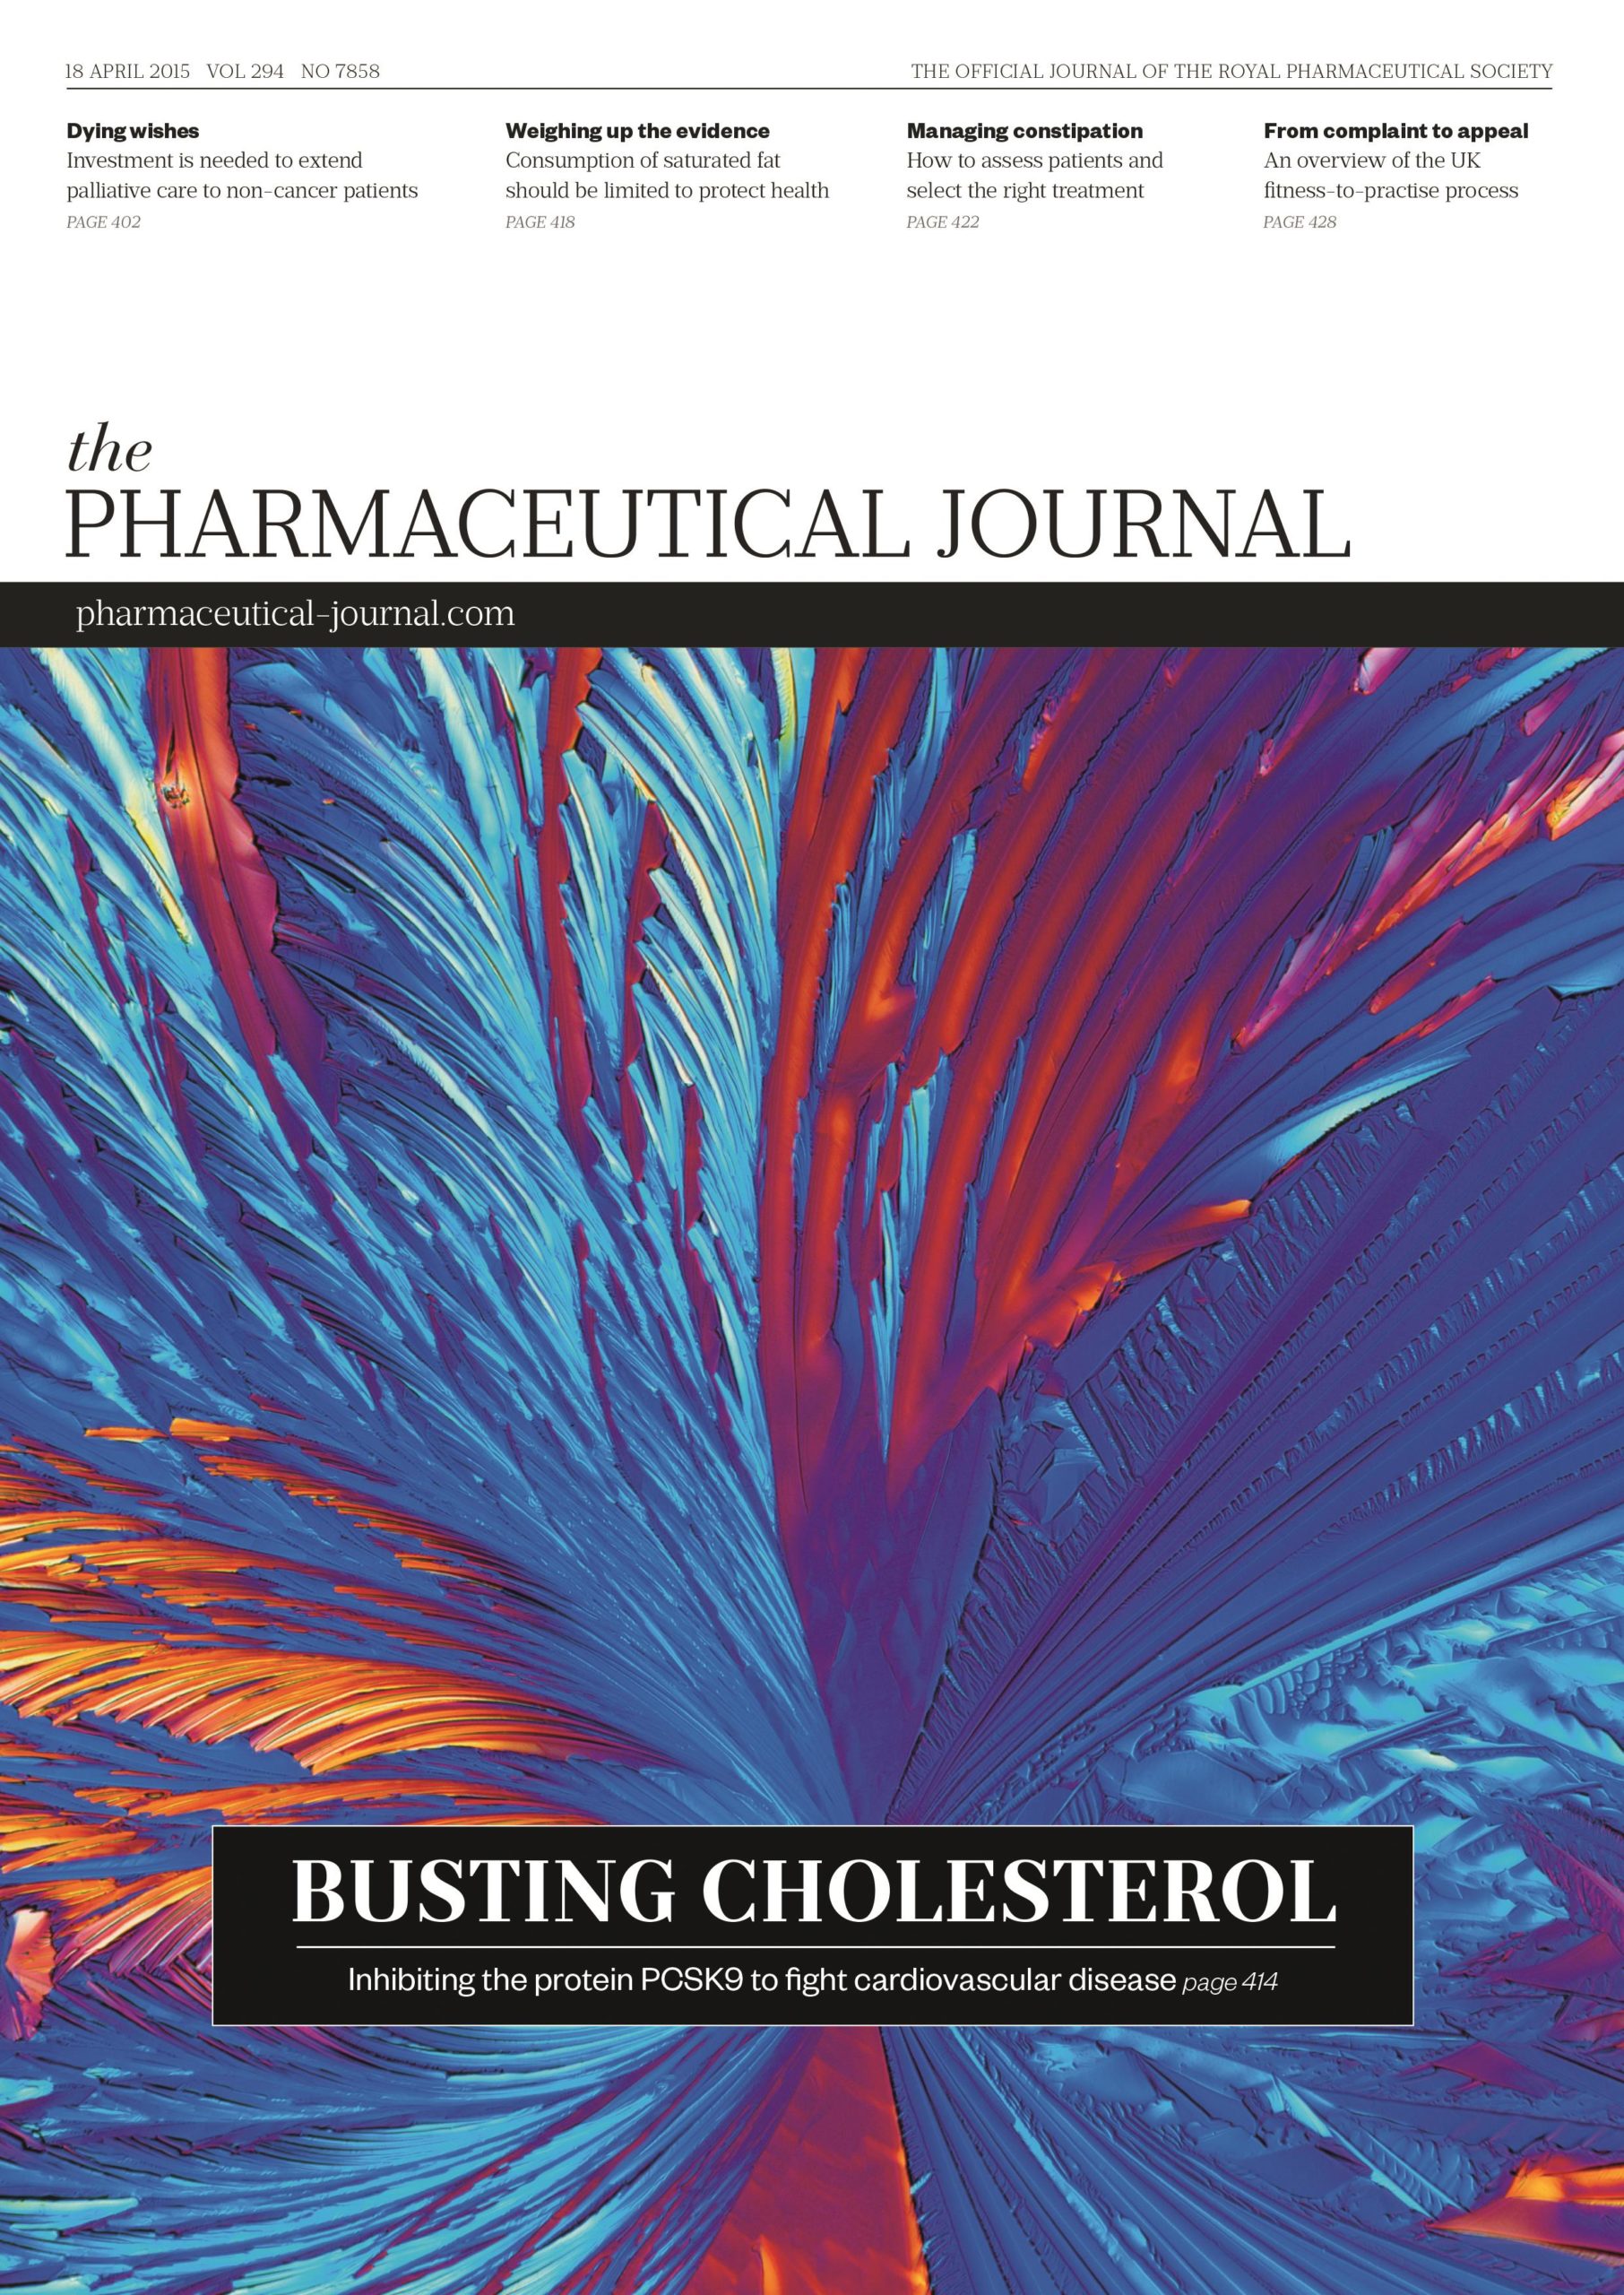 Publication issue cover for PJ, 18 April 2015, Vol 294, No 7858